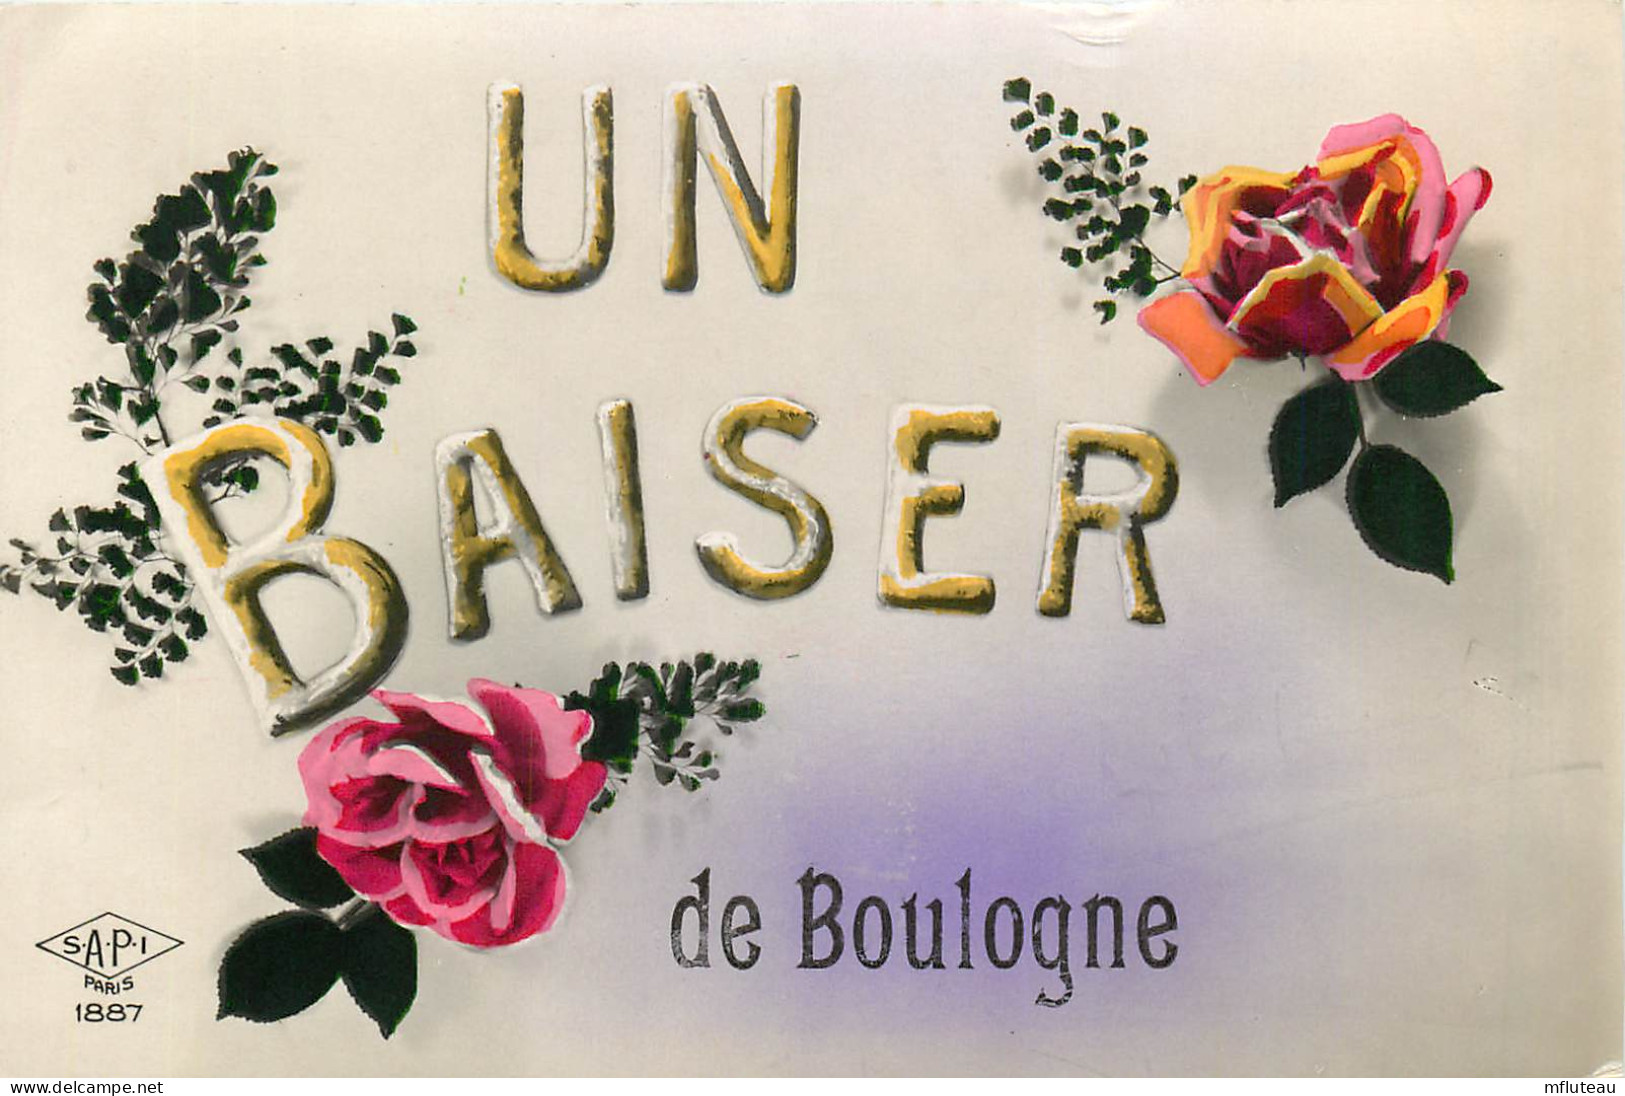 92* BOULOGNE Un Baiser       RL10.0760 - Boulogne Billancourt